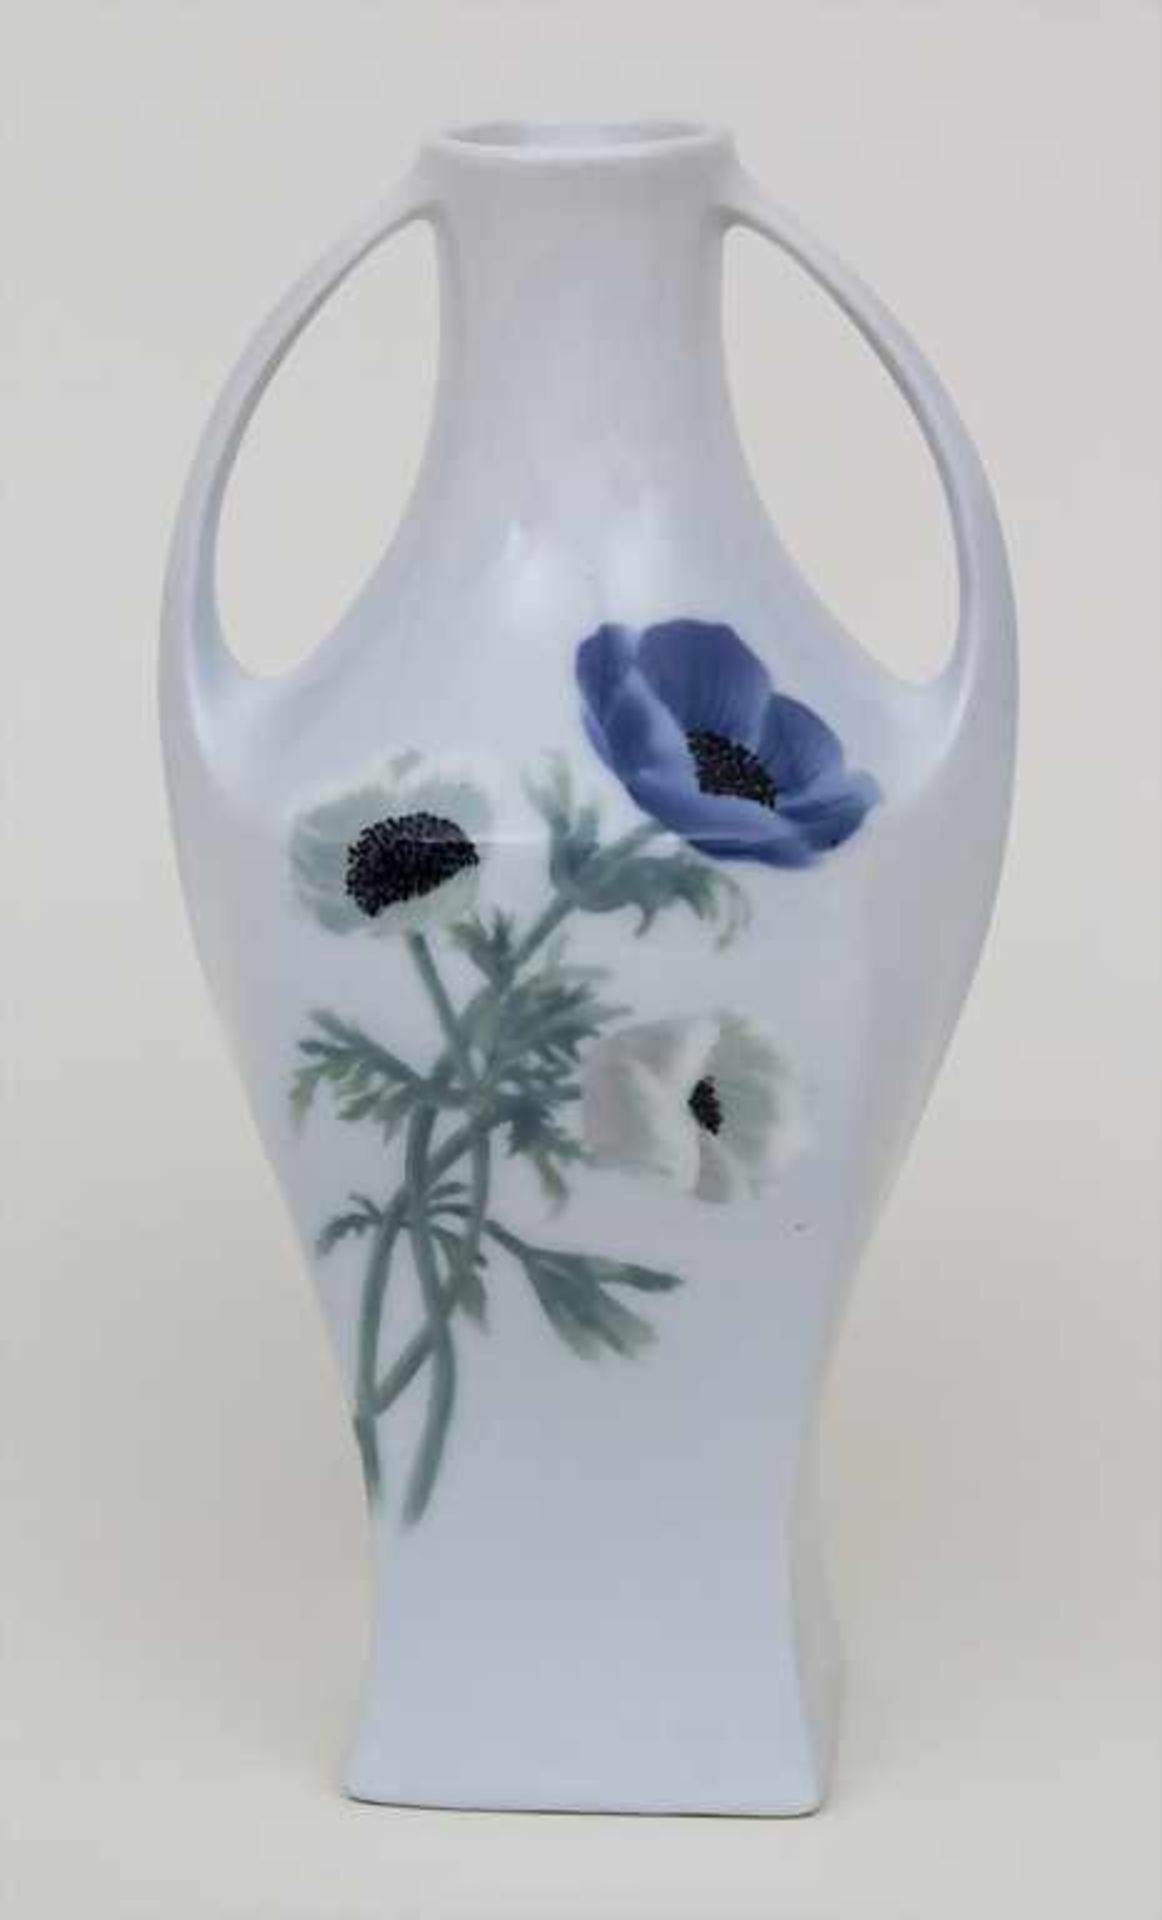 Jugendstil Henkelvase mit Anemonen / An Art Nouveau vase with handles and anemones, Metzler &